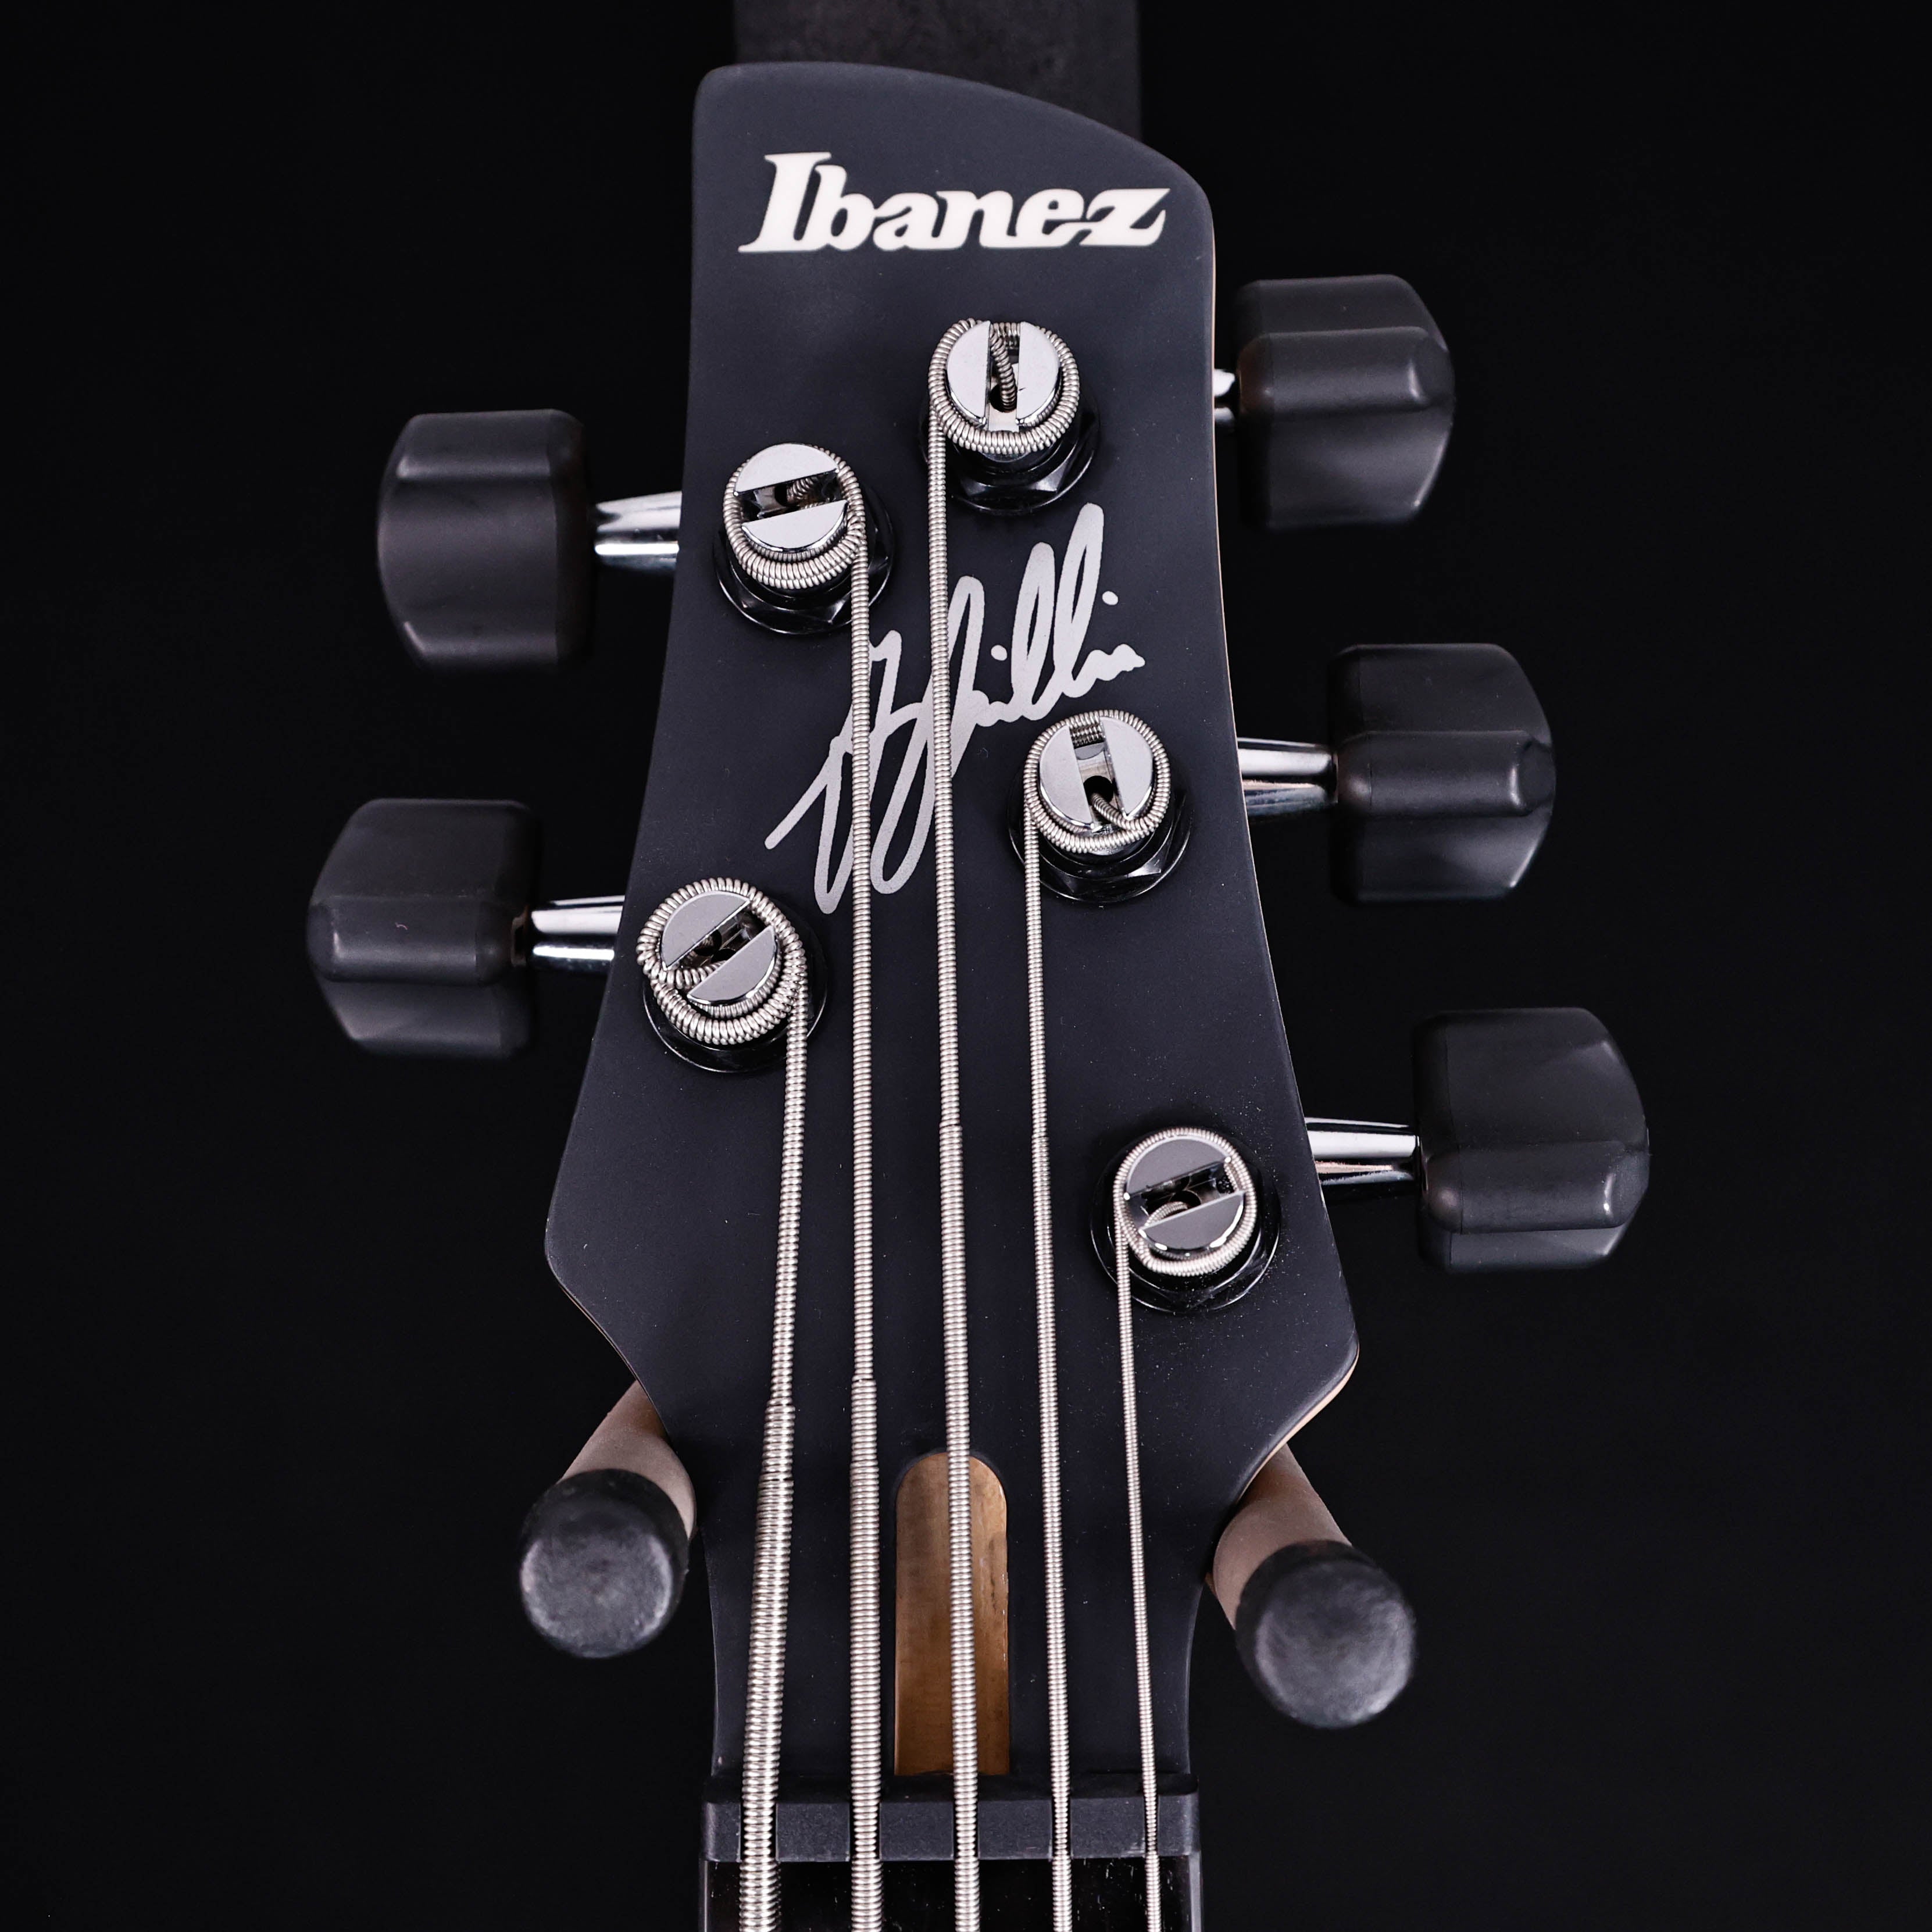 Ibanez Gary Willis 25th-Anniv Signature 5-string Fretless Bass, Silver Wave Burst 8lbs 6.2oz